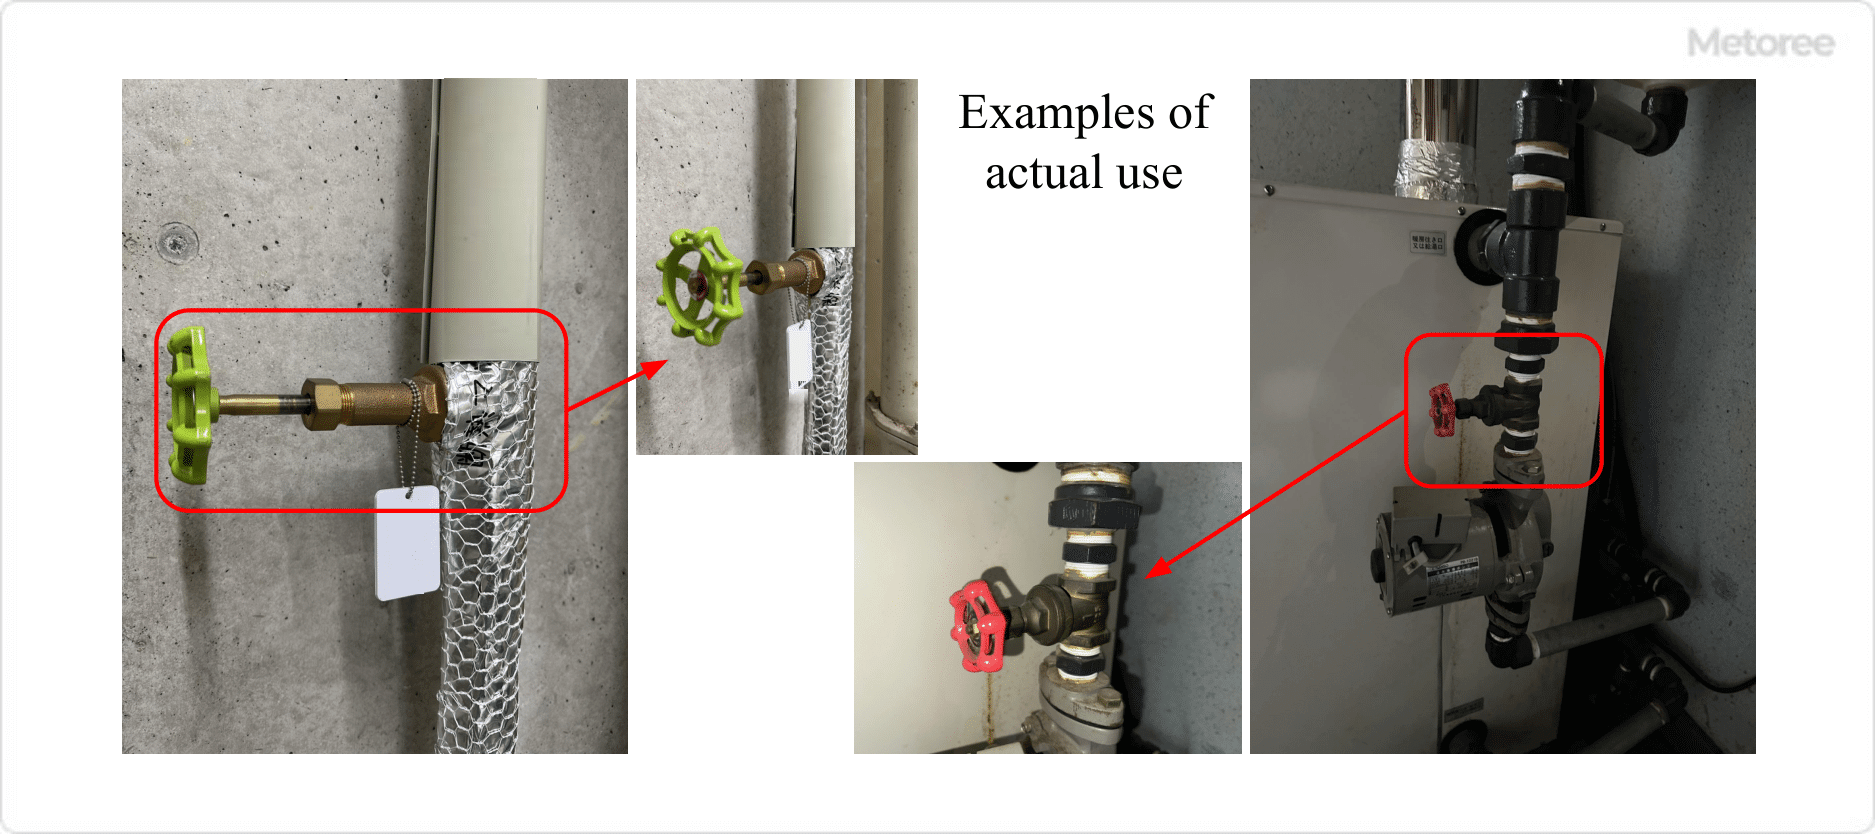 Figure 1. Example of manual valve use